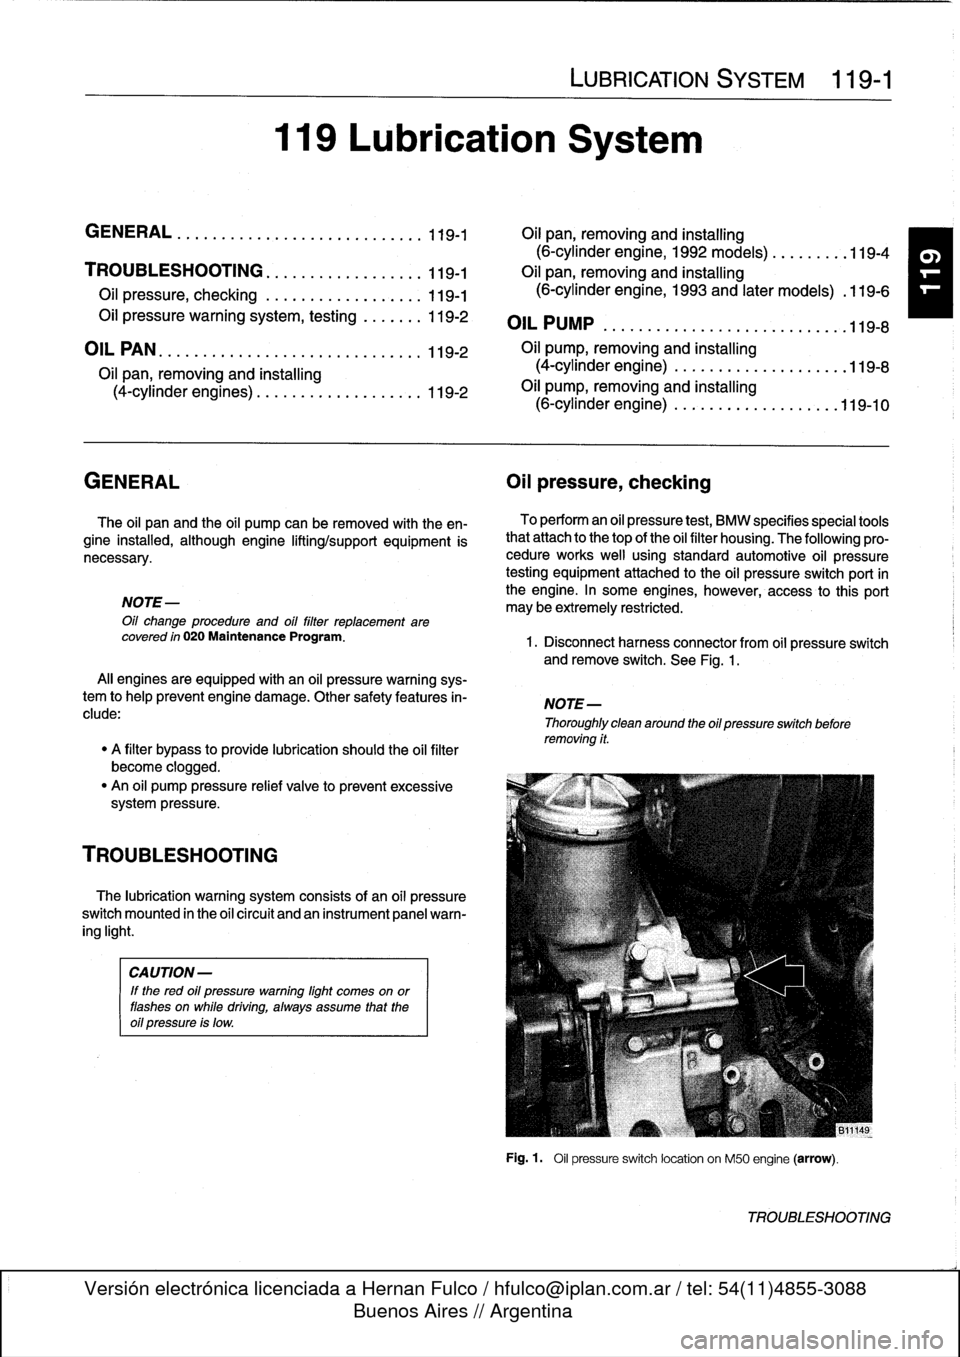 BMW 323i 1995 E36 Workshop Manual 
119
Lubrication
System

LUBRICATION
SYSTEM

	

119-1

GENERAL
.
.
.
.
.
.
...
.
.
.
.
.
.
.
...,
,
...
.
.
.
.
119-1

	

OH
pan,
removing
and
installing

(6-cylinder
engine,
1992
models)
.
.
.
.
.
.
